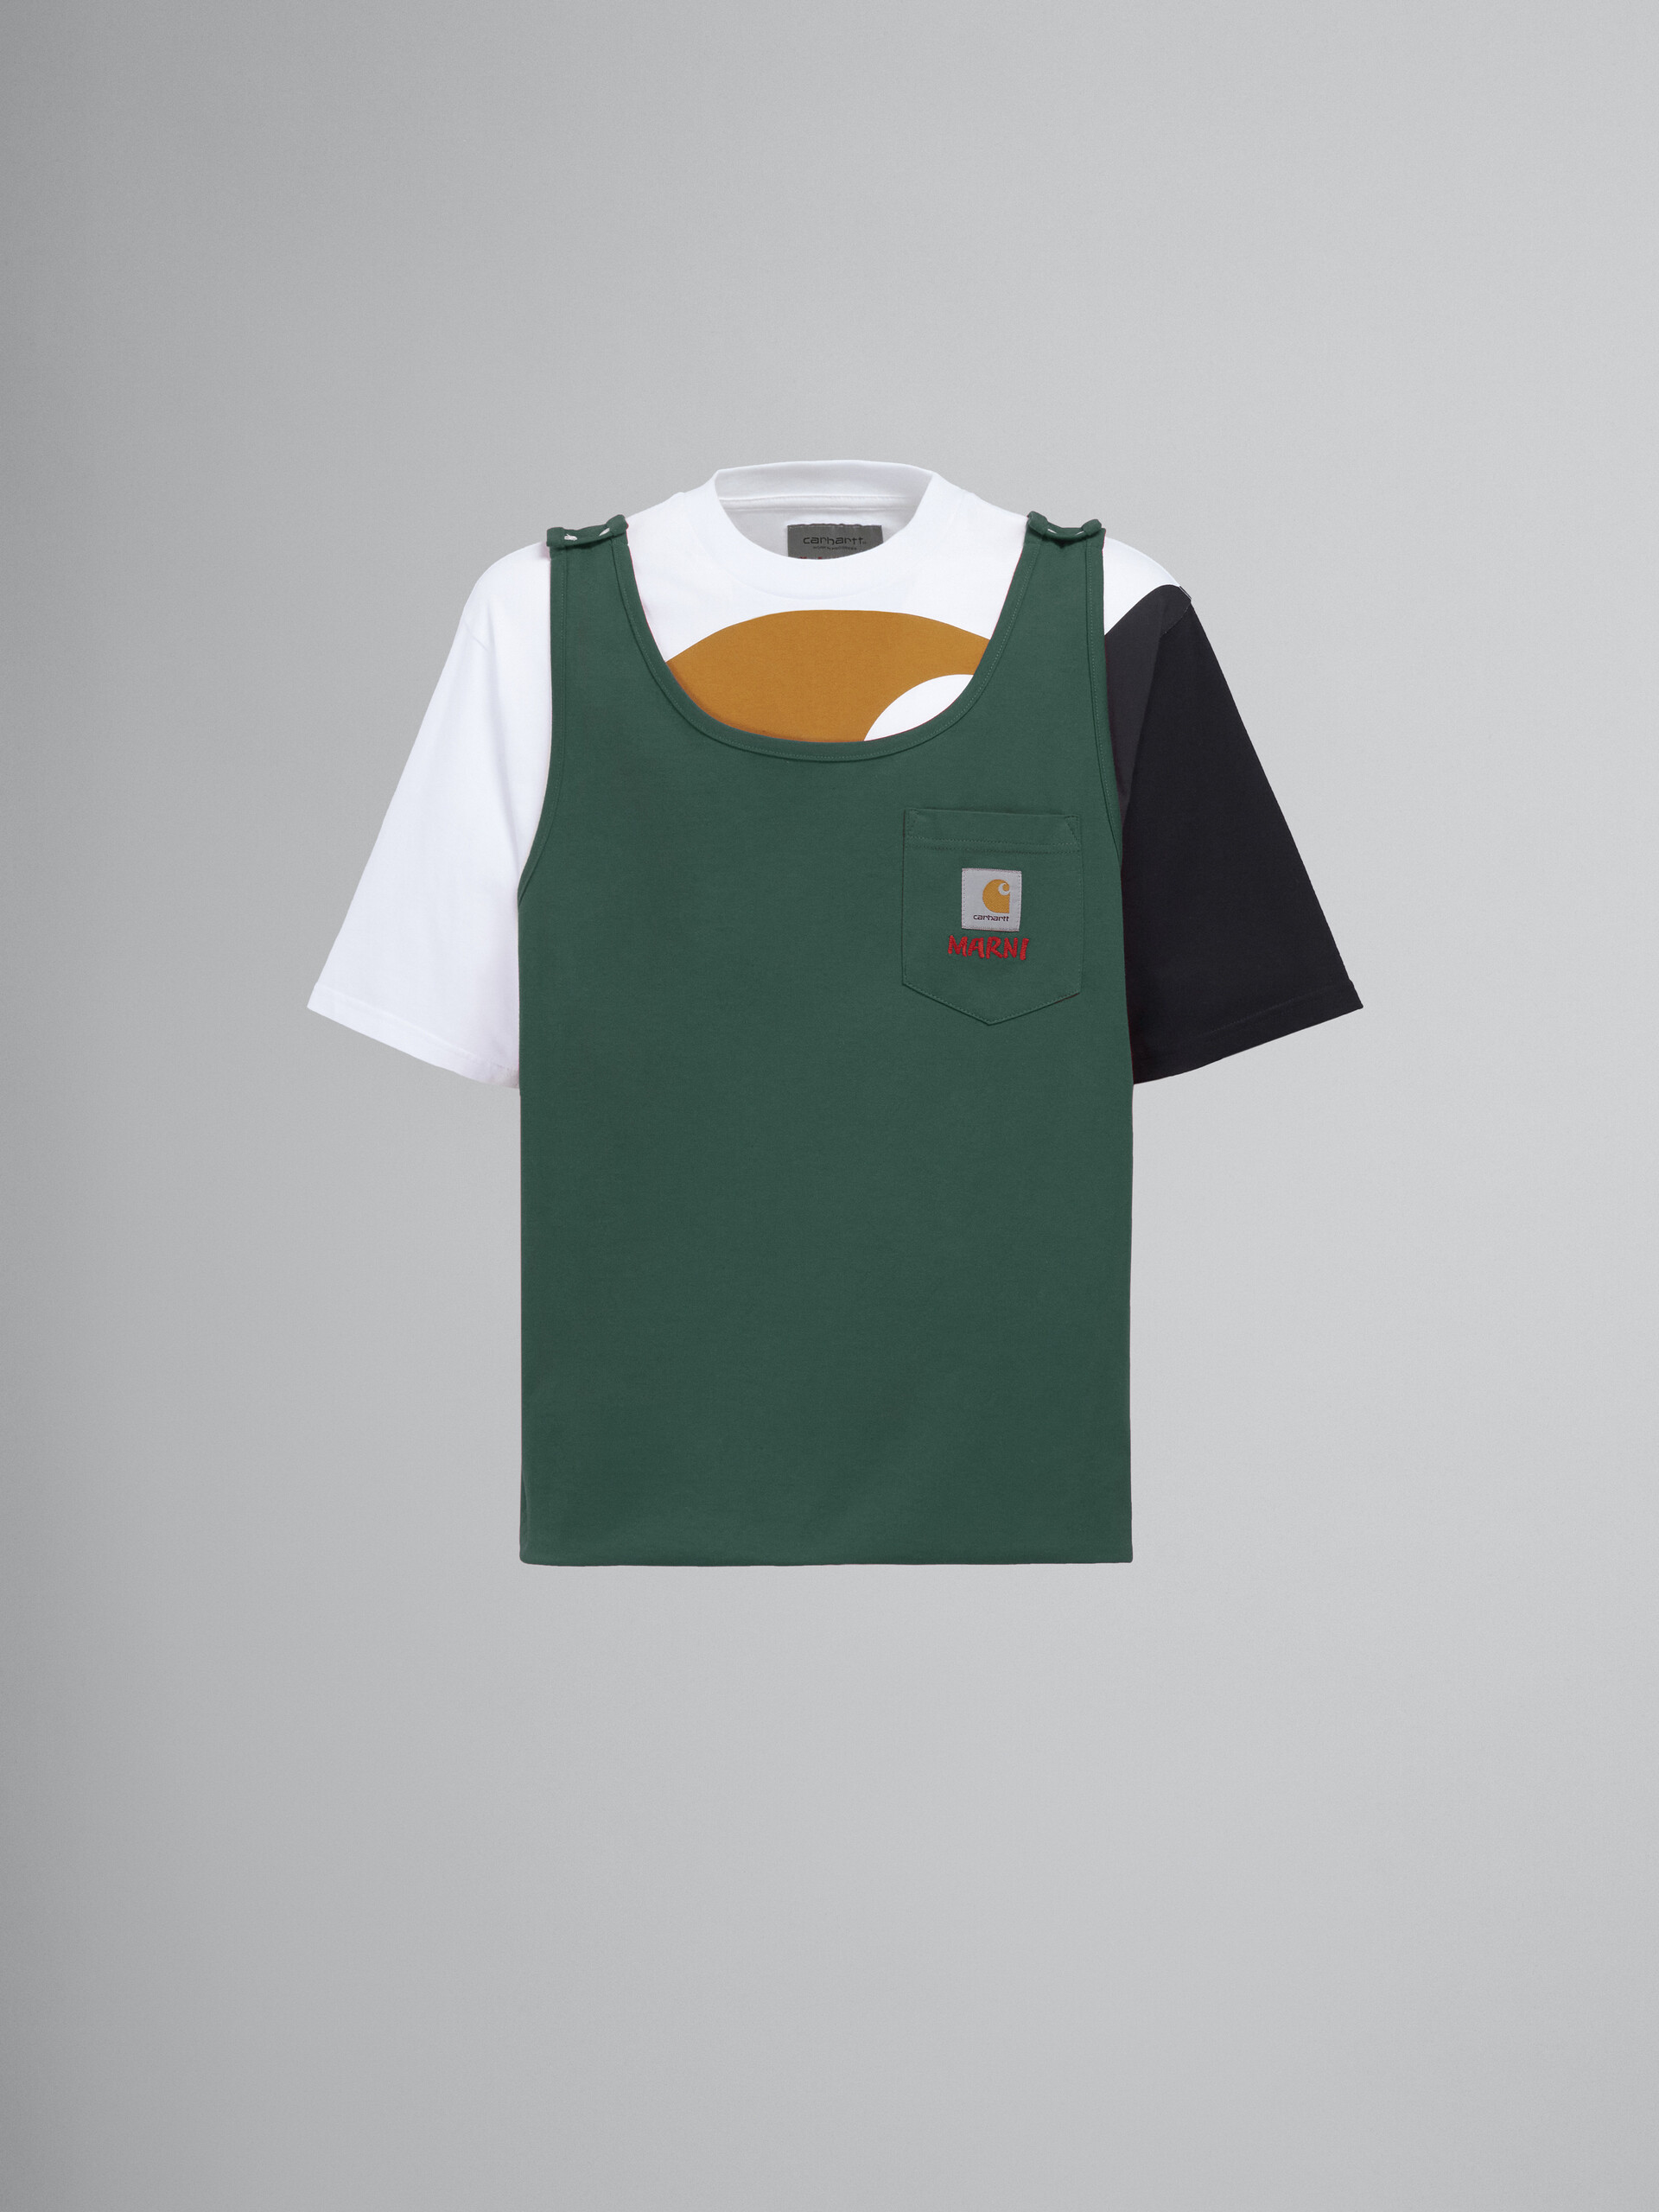 MARNI x CARHARTT WIP - T-shirt with green vest - T-shirts - Image 1